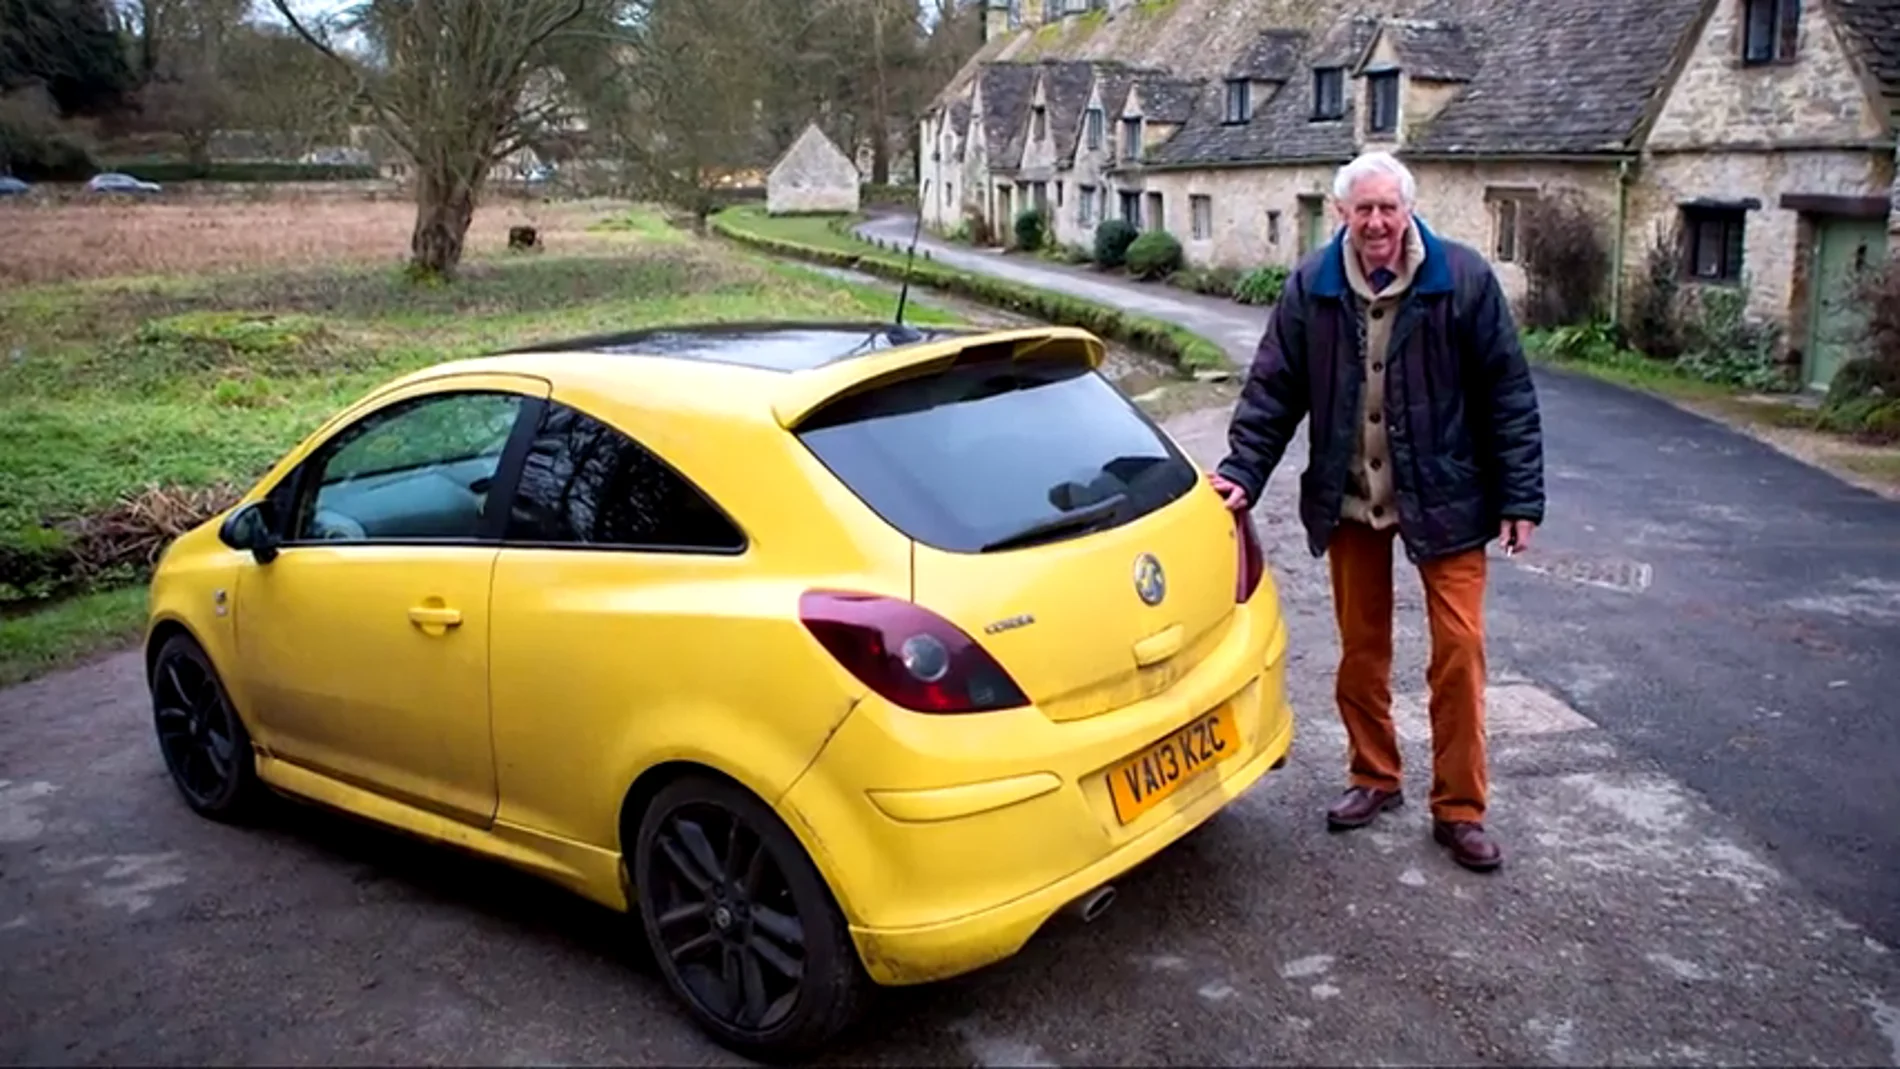  Peter Maddox con su Vauxhaull amarillo